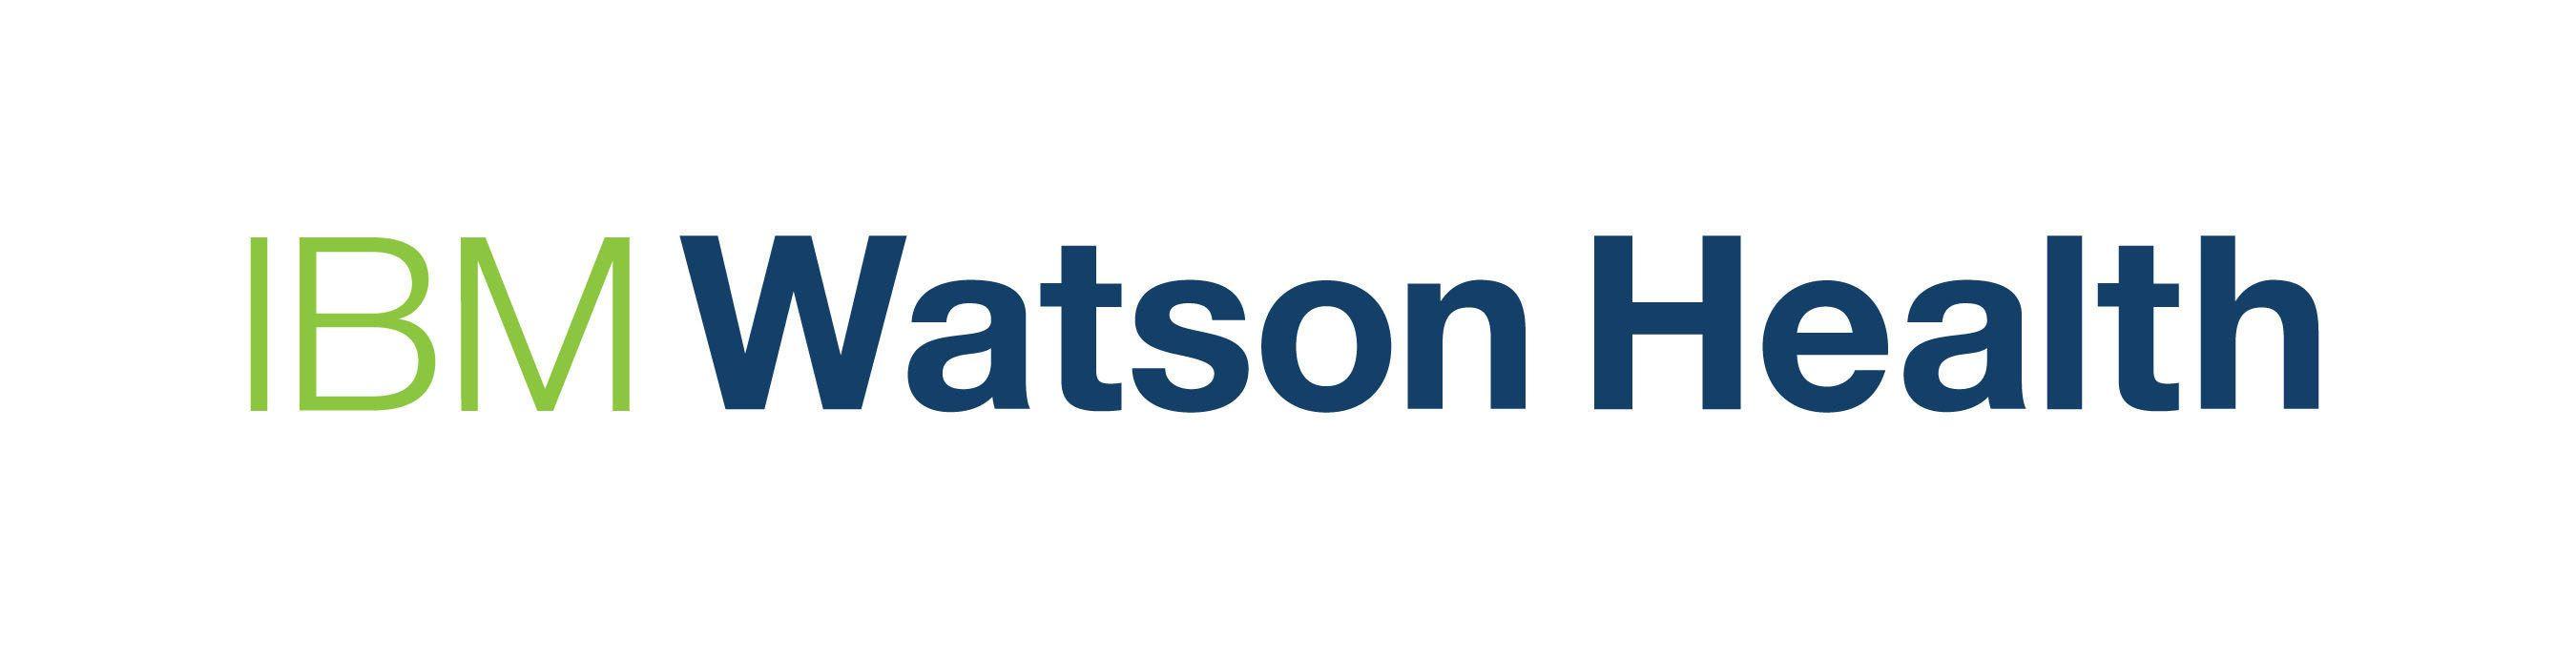 IBM Watson Health Logo - IBM Watson Health Cloud Capabilities Expand